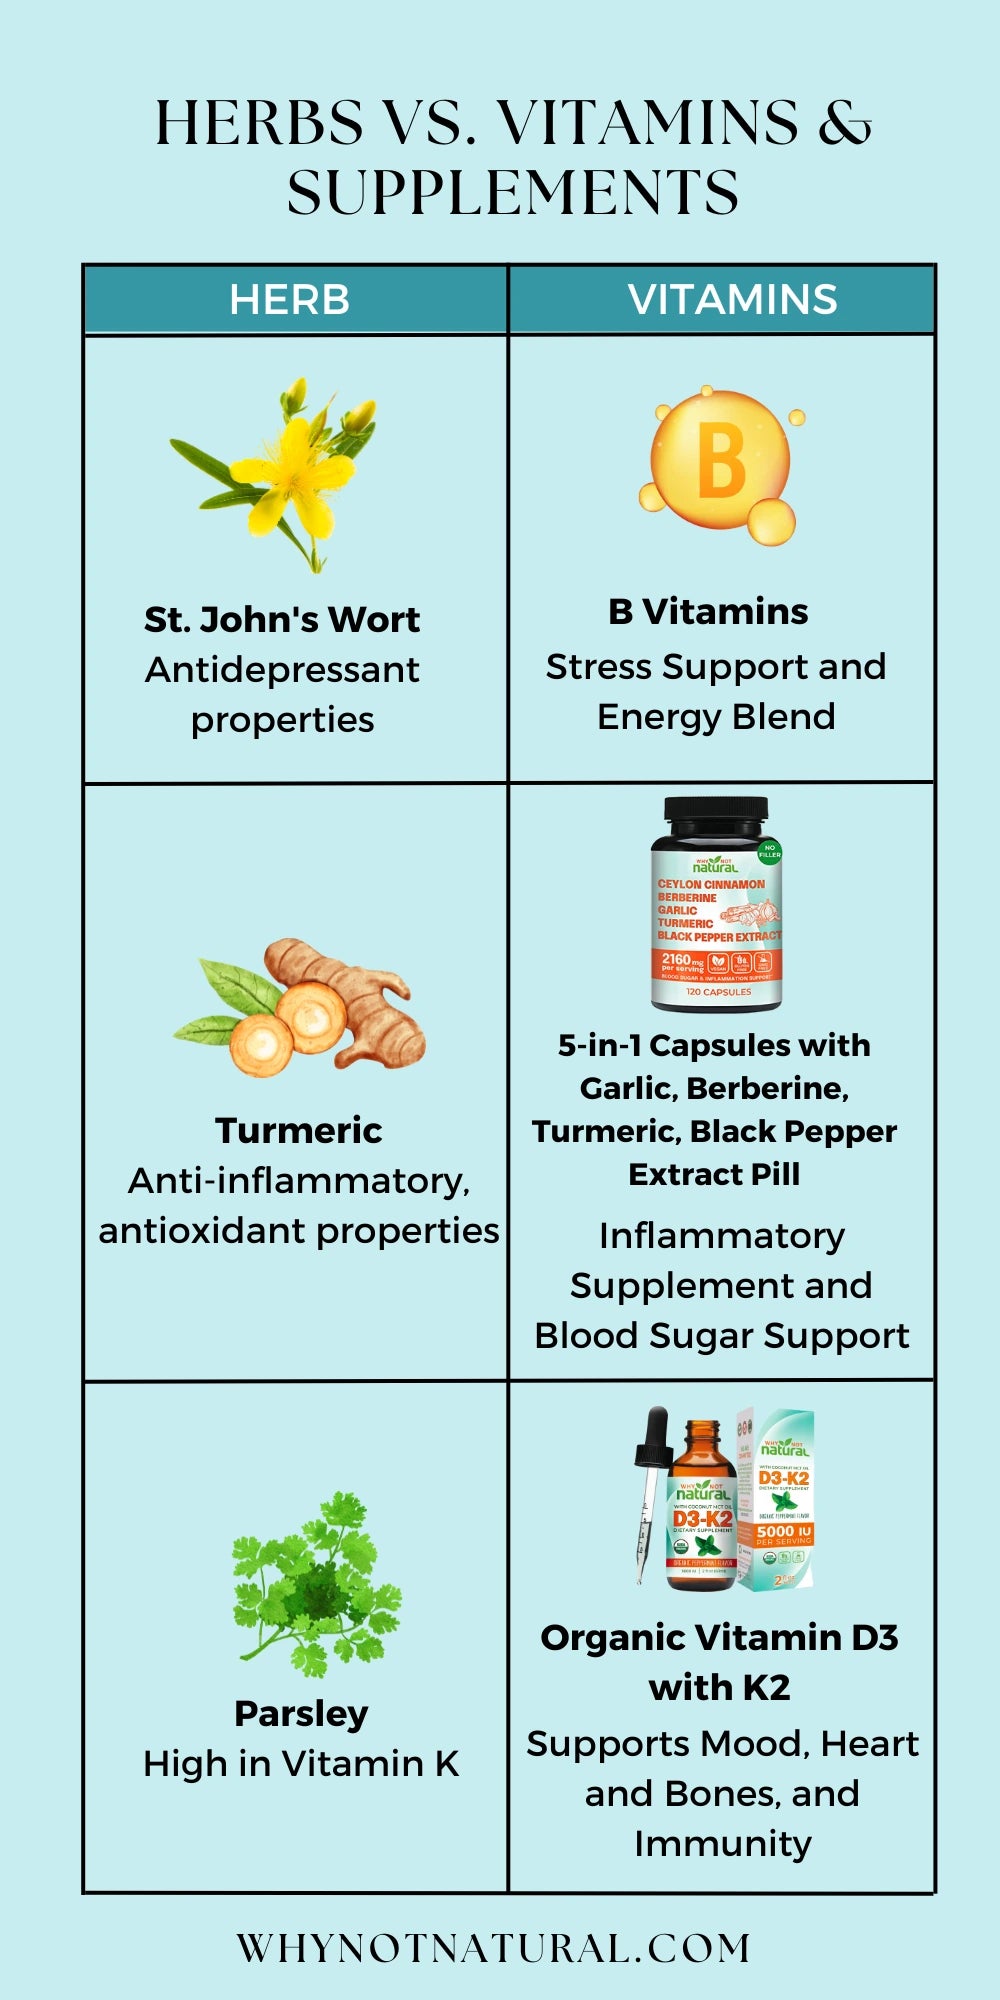 Vitamins vs. Herbs